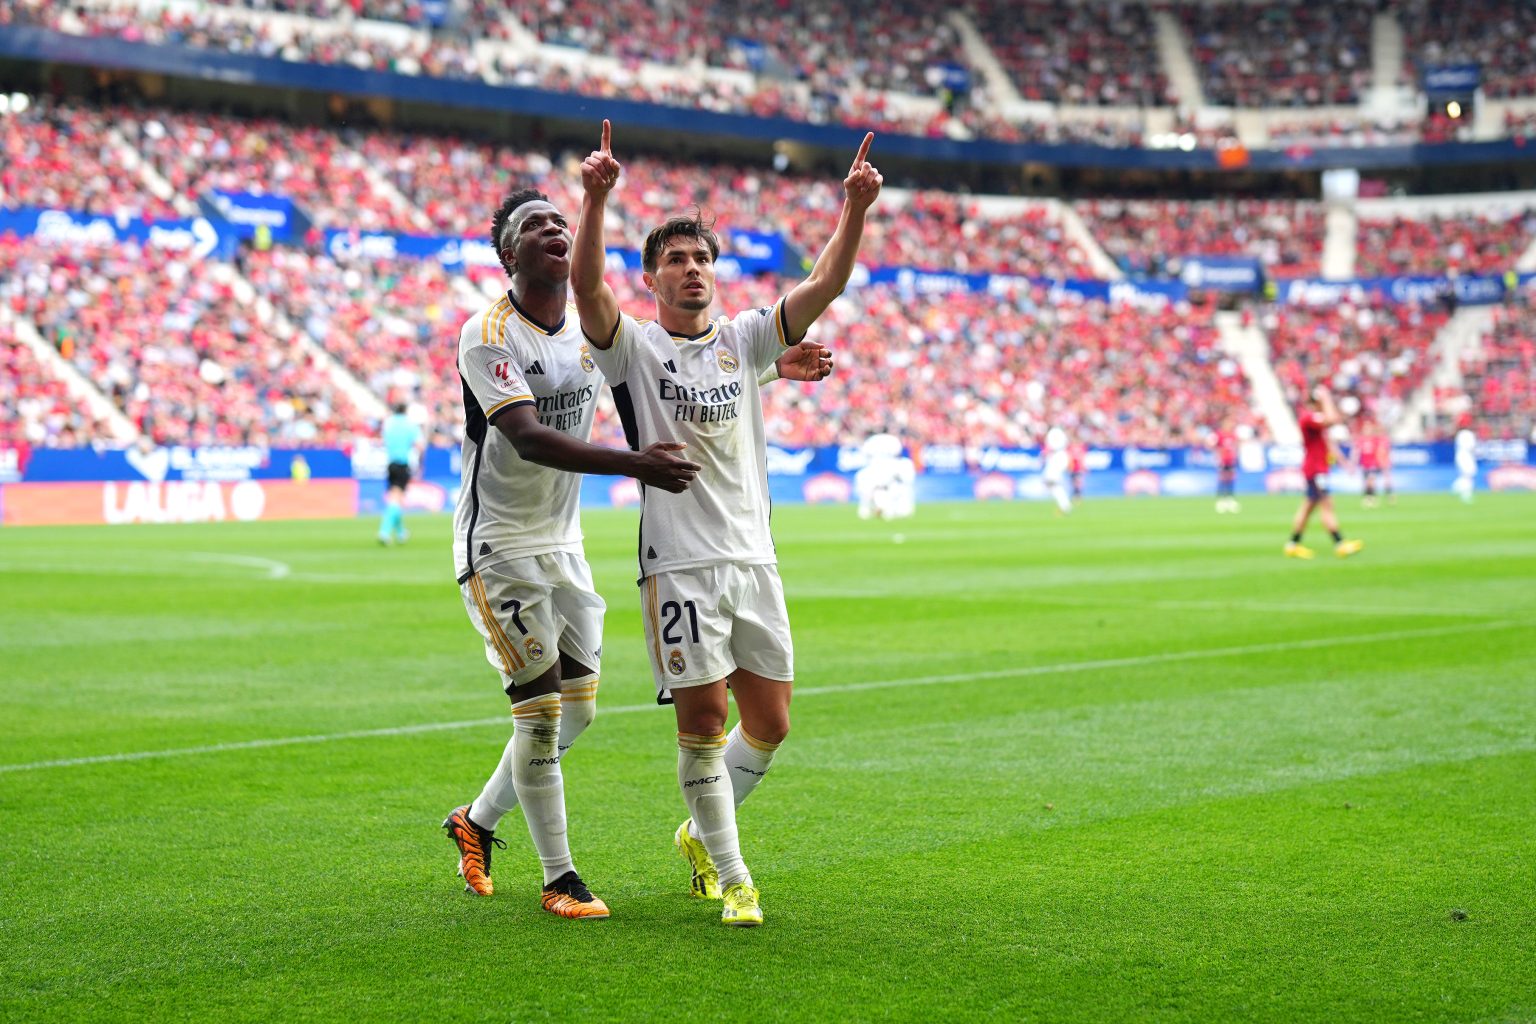 Real Madrid 4-2 Osasuna: Vinicius Jr. nets brace, extends LaLiga lead by 10 points | La Liga